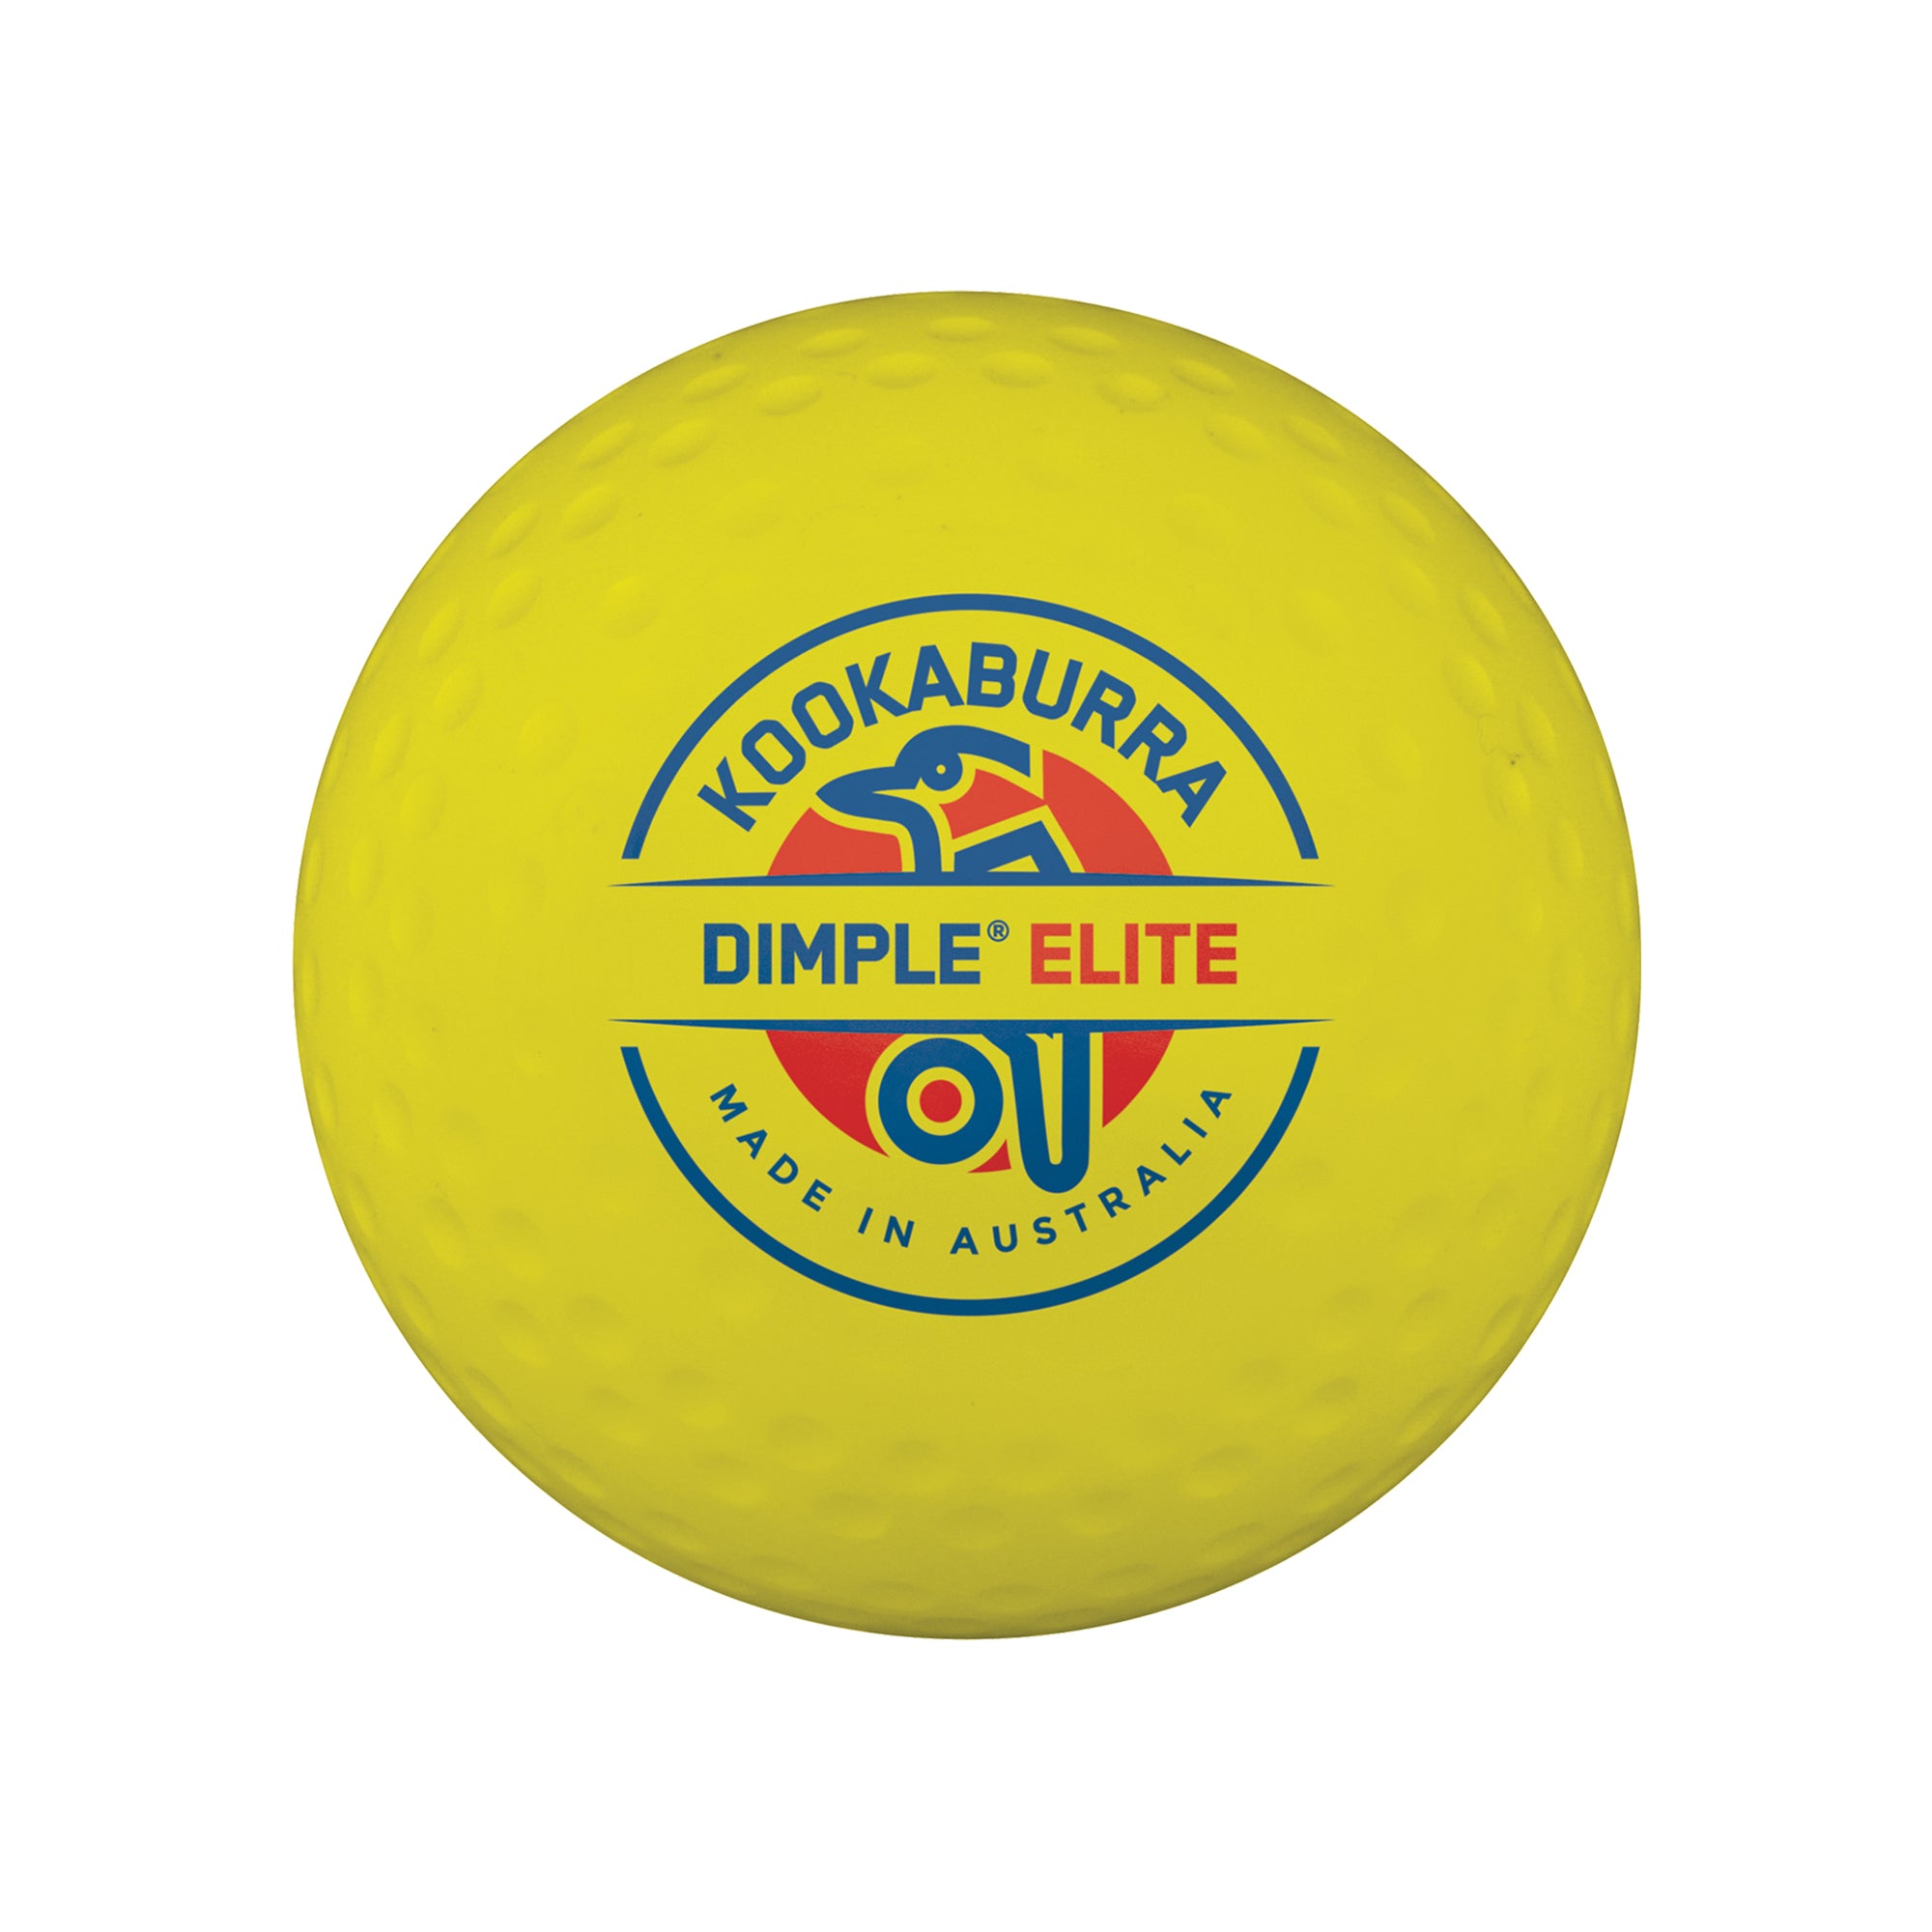 Kookaburra Dimple Elite Hockey Ball - Yellow